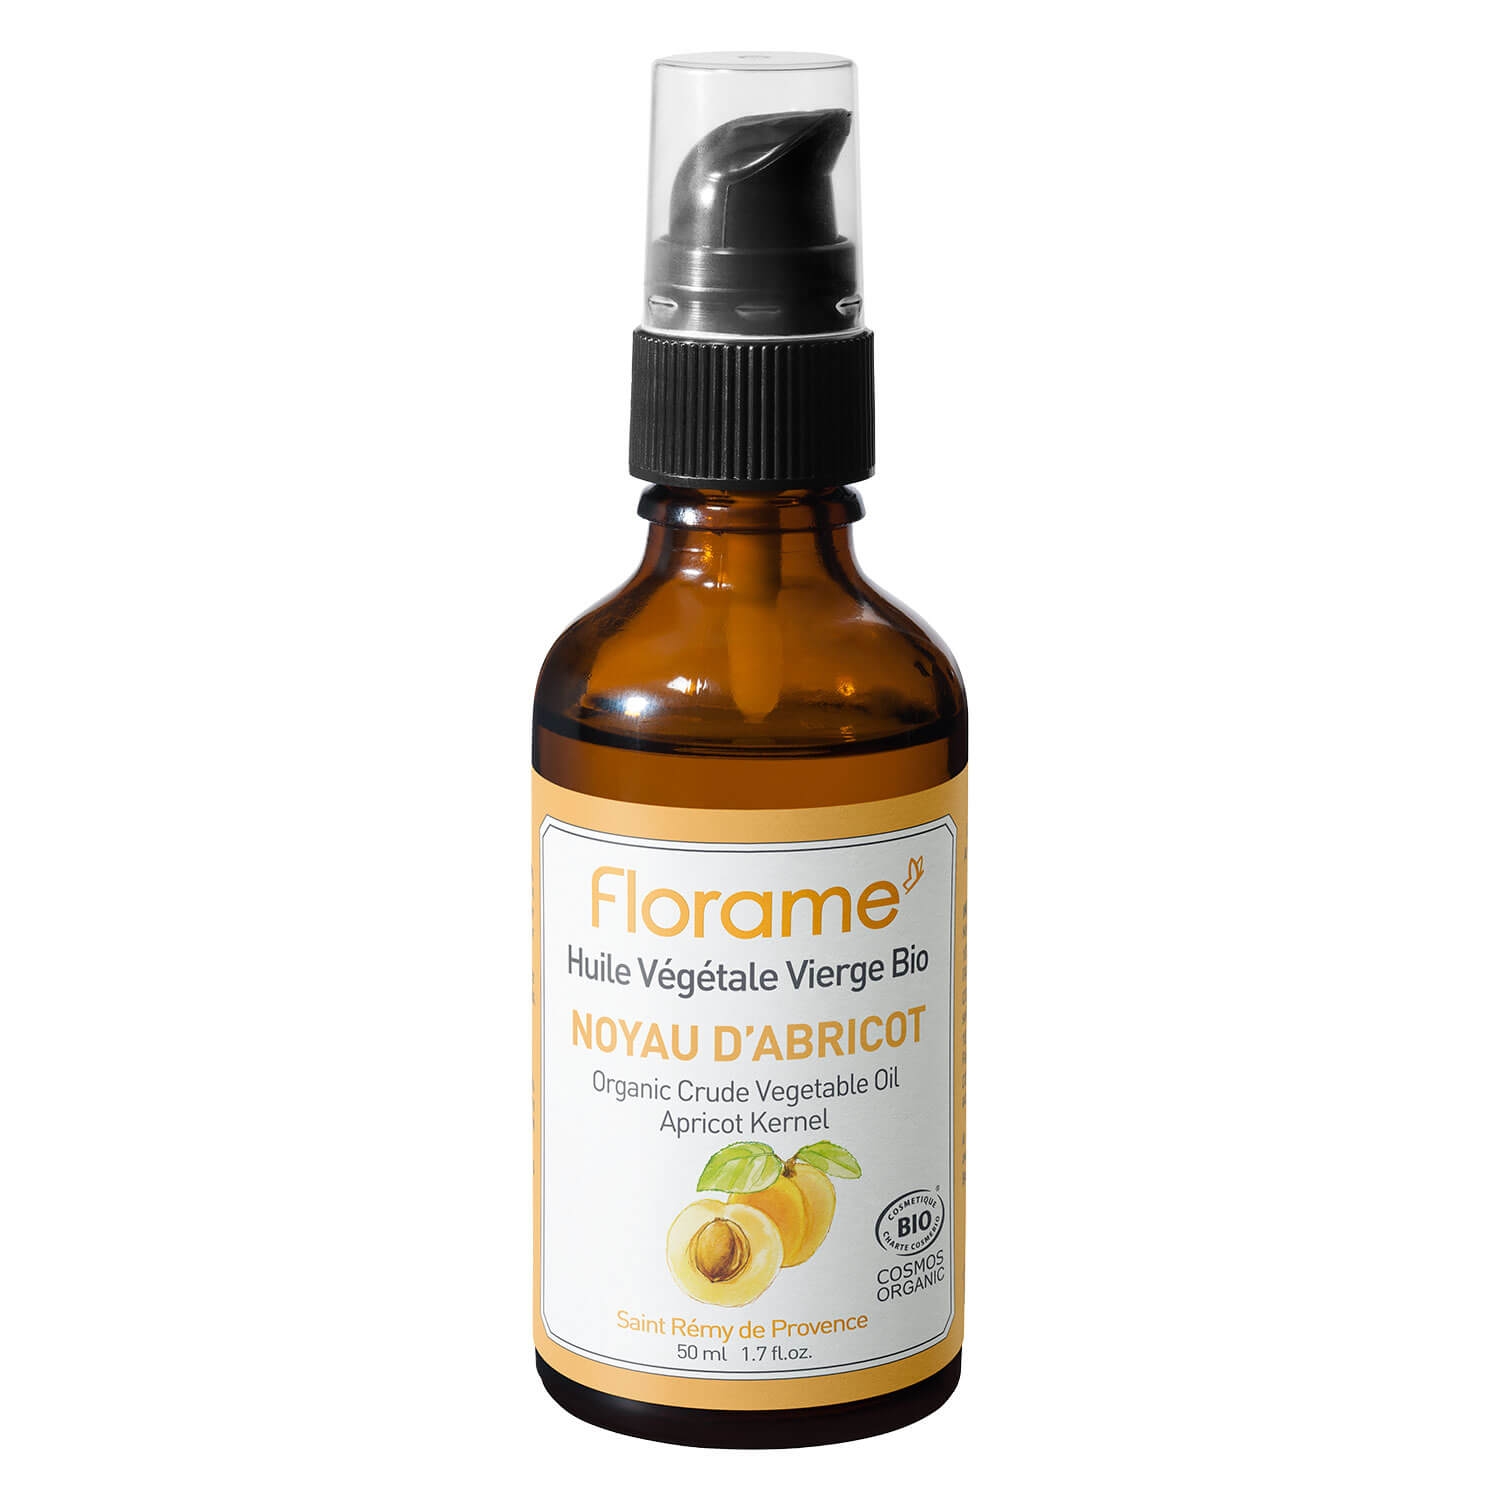 Produktbild von Florame - Organic Apricol Kernels Vegetable Oil